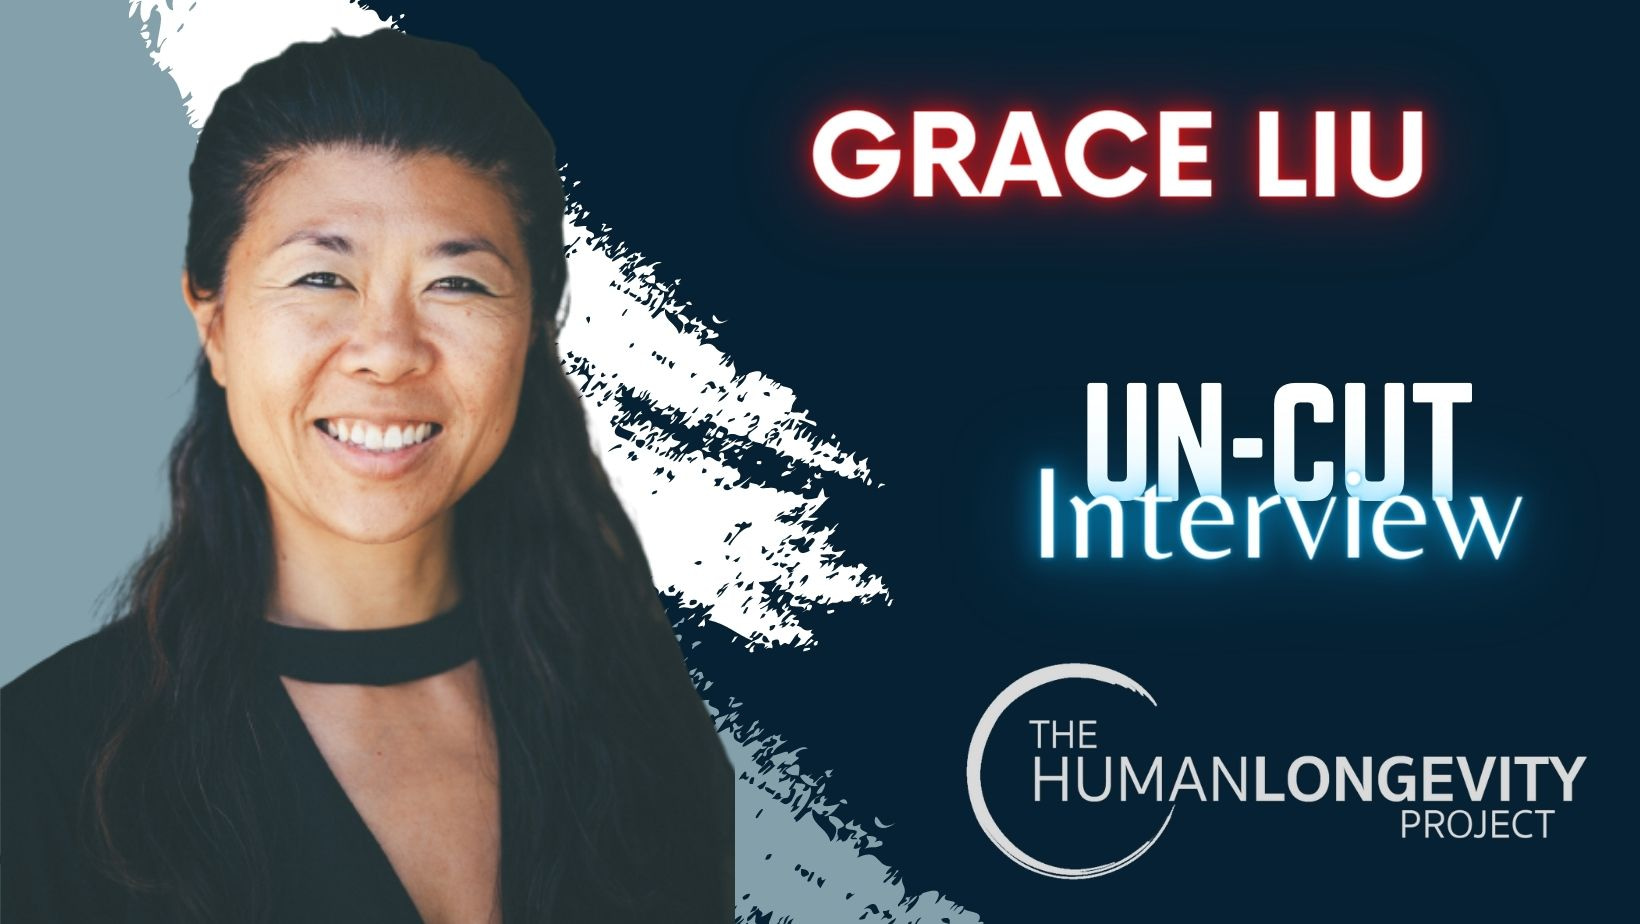 Human Longevity Project Uncut Interview With Dr. Grace Liu